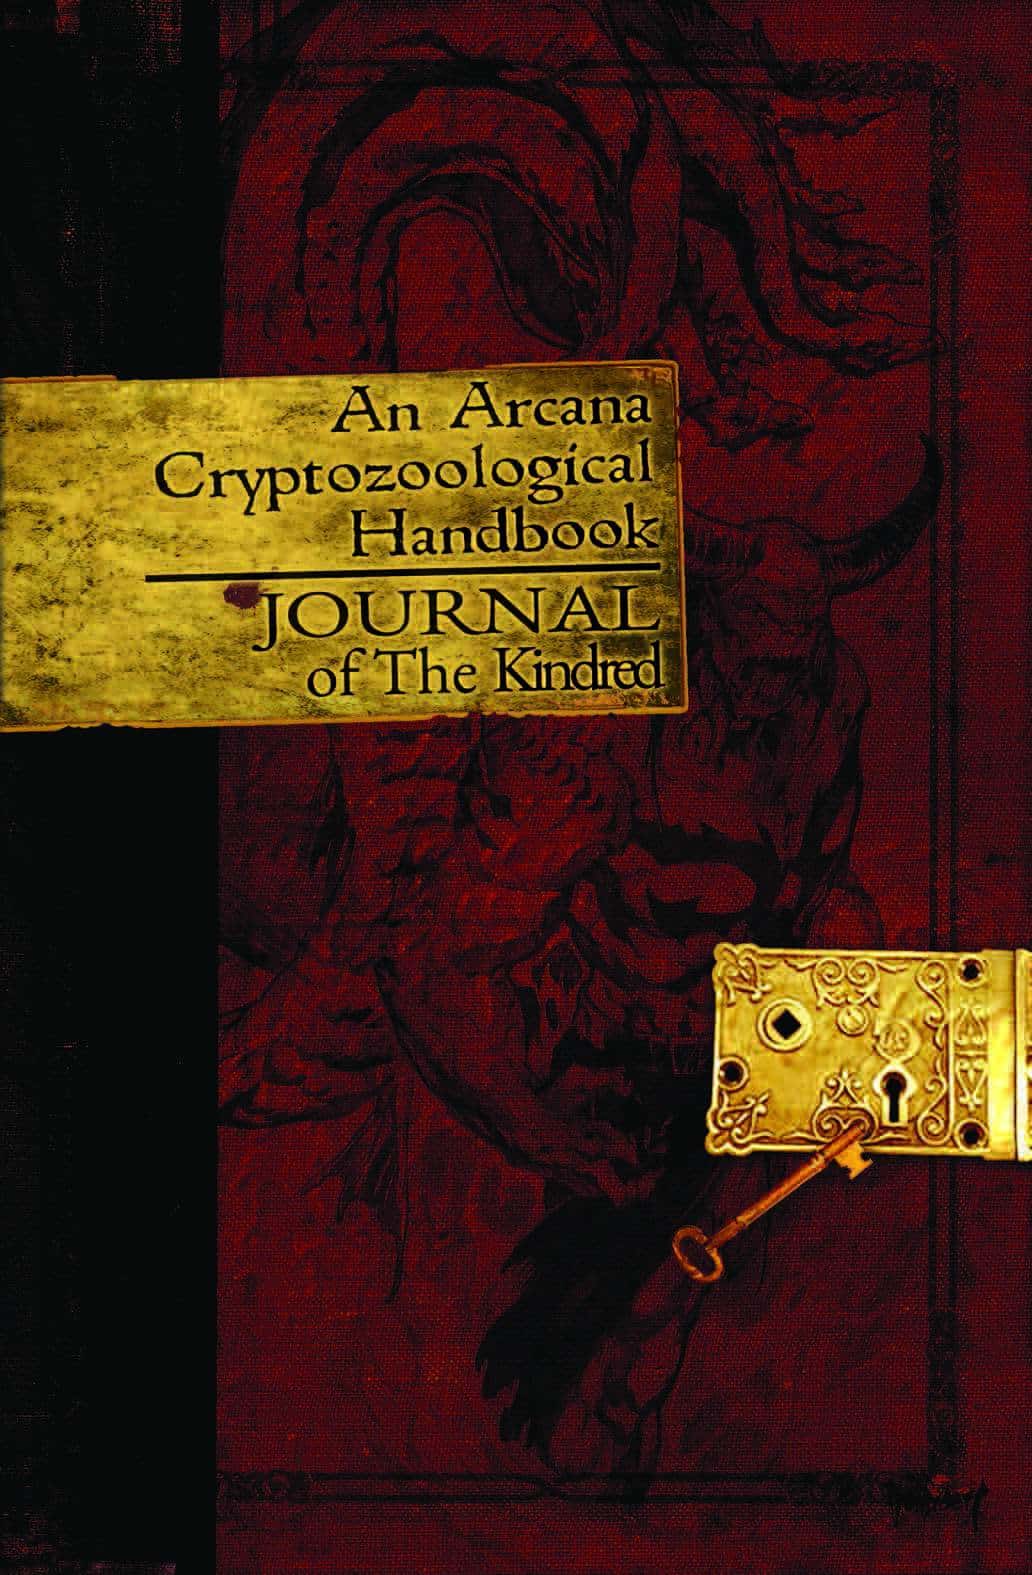 An Arcana Cryptozoology Handbook: Journal of the Kindred 1